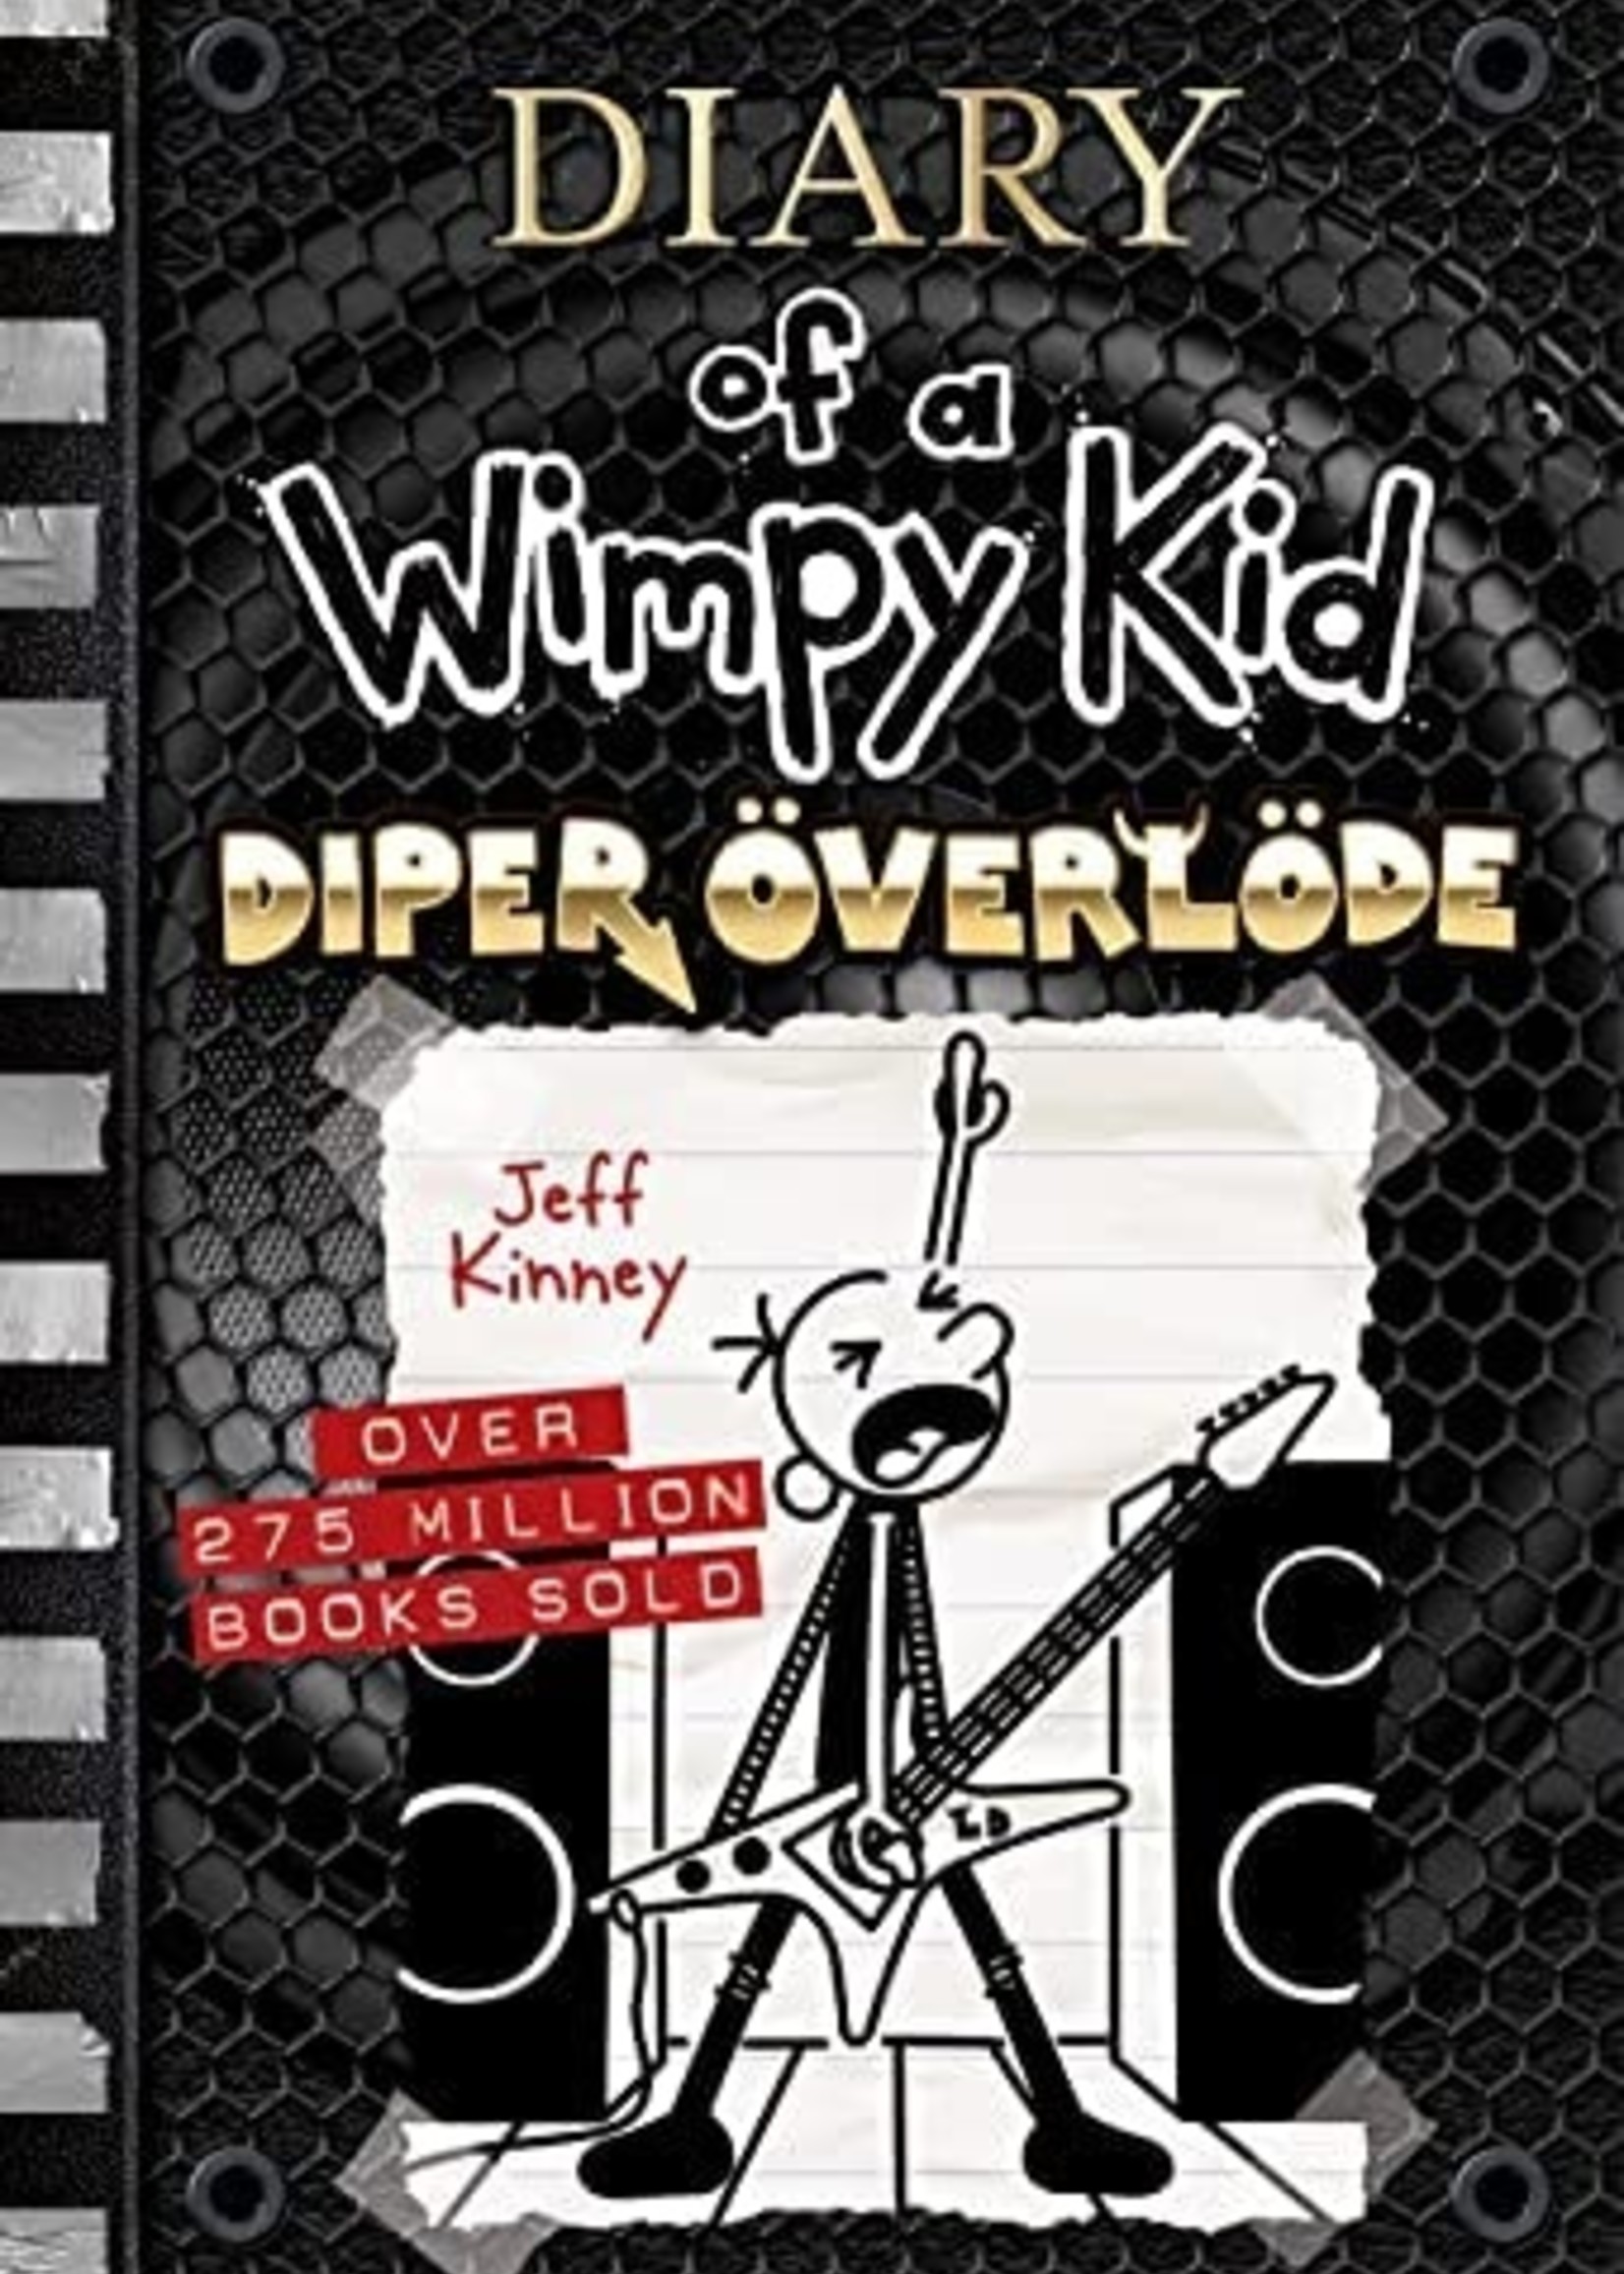 Diary of a Wimpy Kid Illustrated Novel #17,  Diper Överlöde - Hardcover